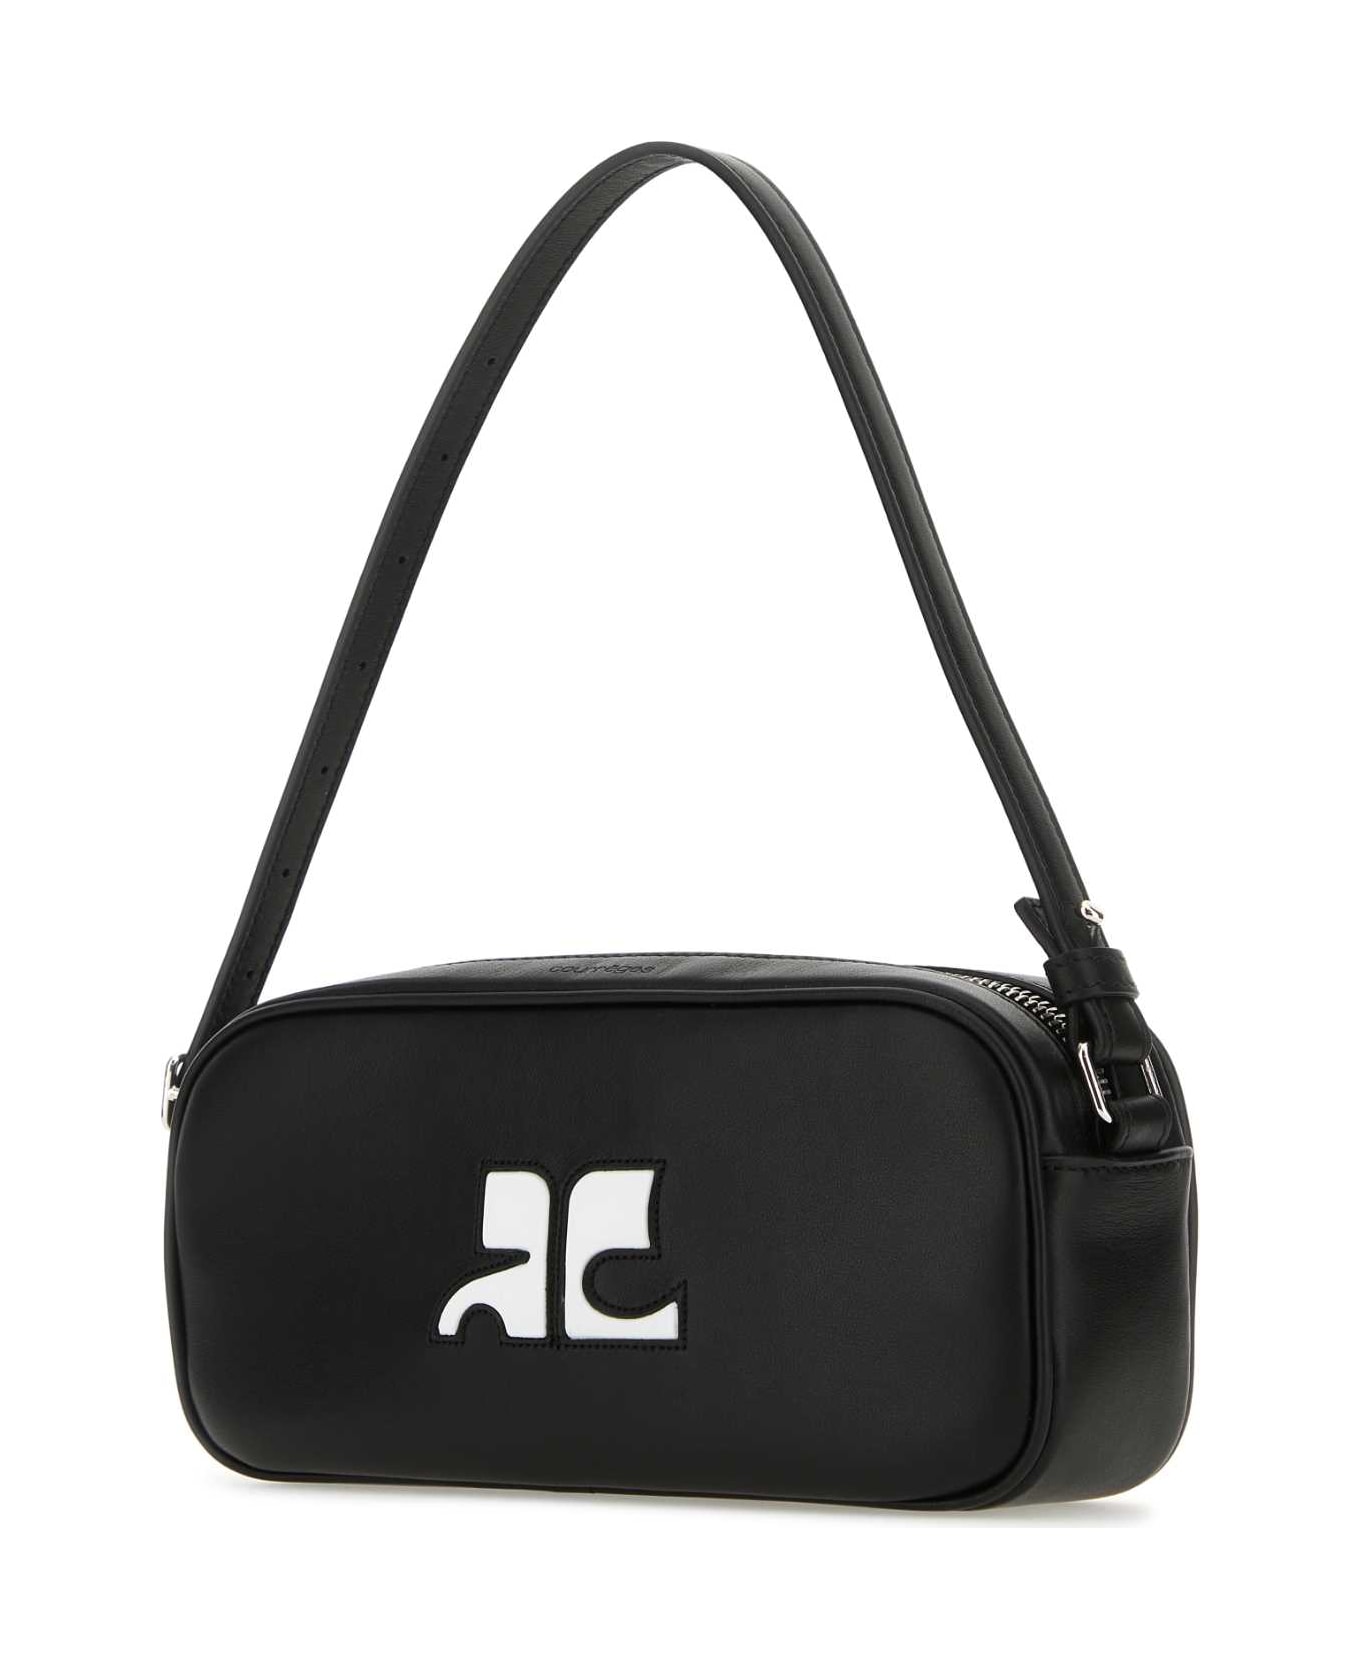 Courrèges Black Leather Rã©ã©dition Shoulder Bag - Black